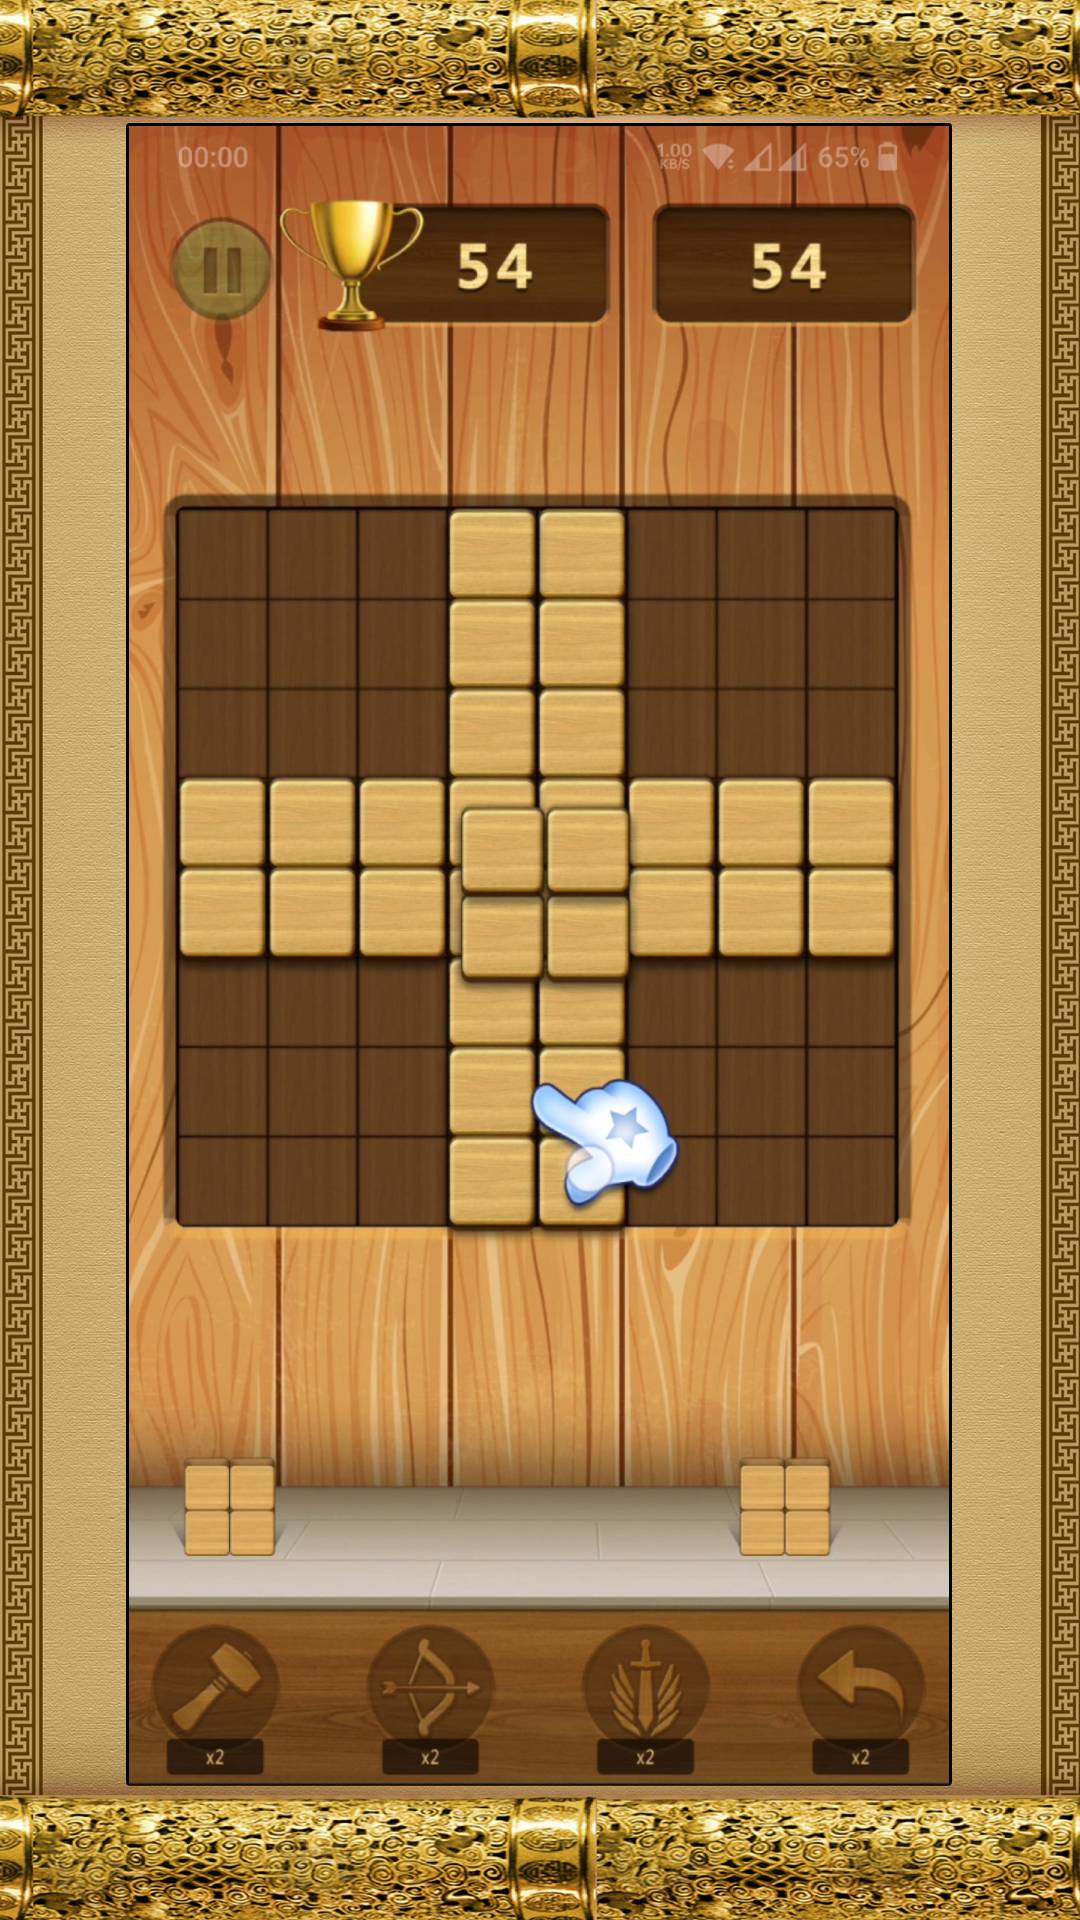 Bloxe: Wood Block Puzzle Game by Sabia Media Israel LTD